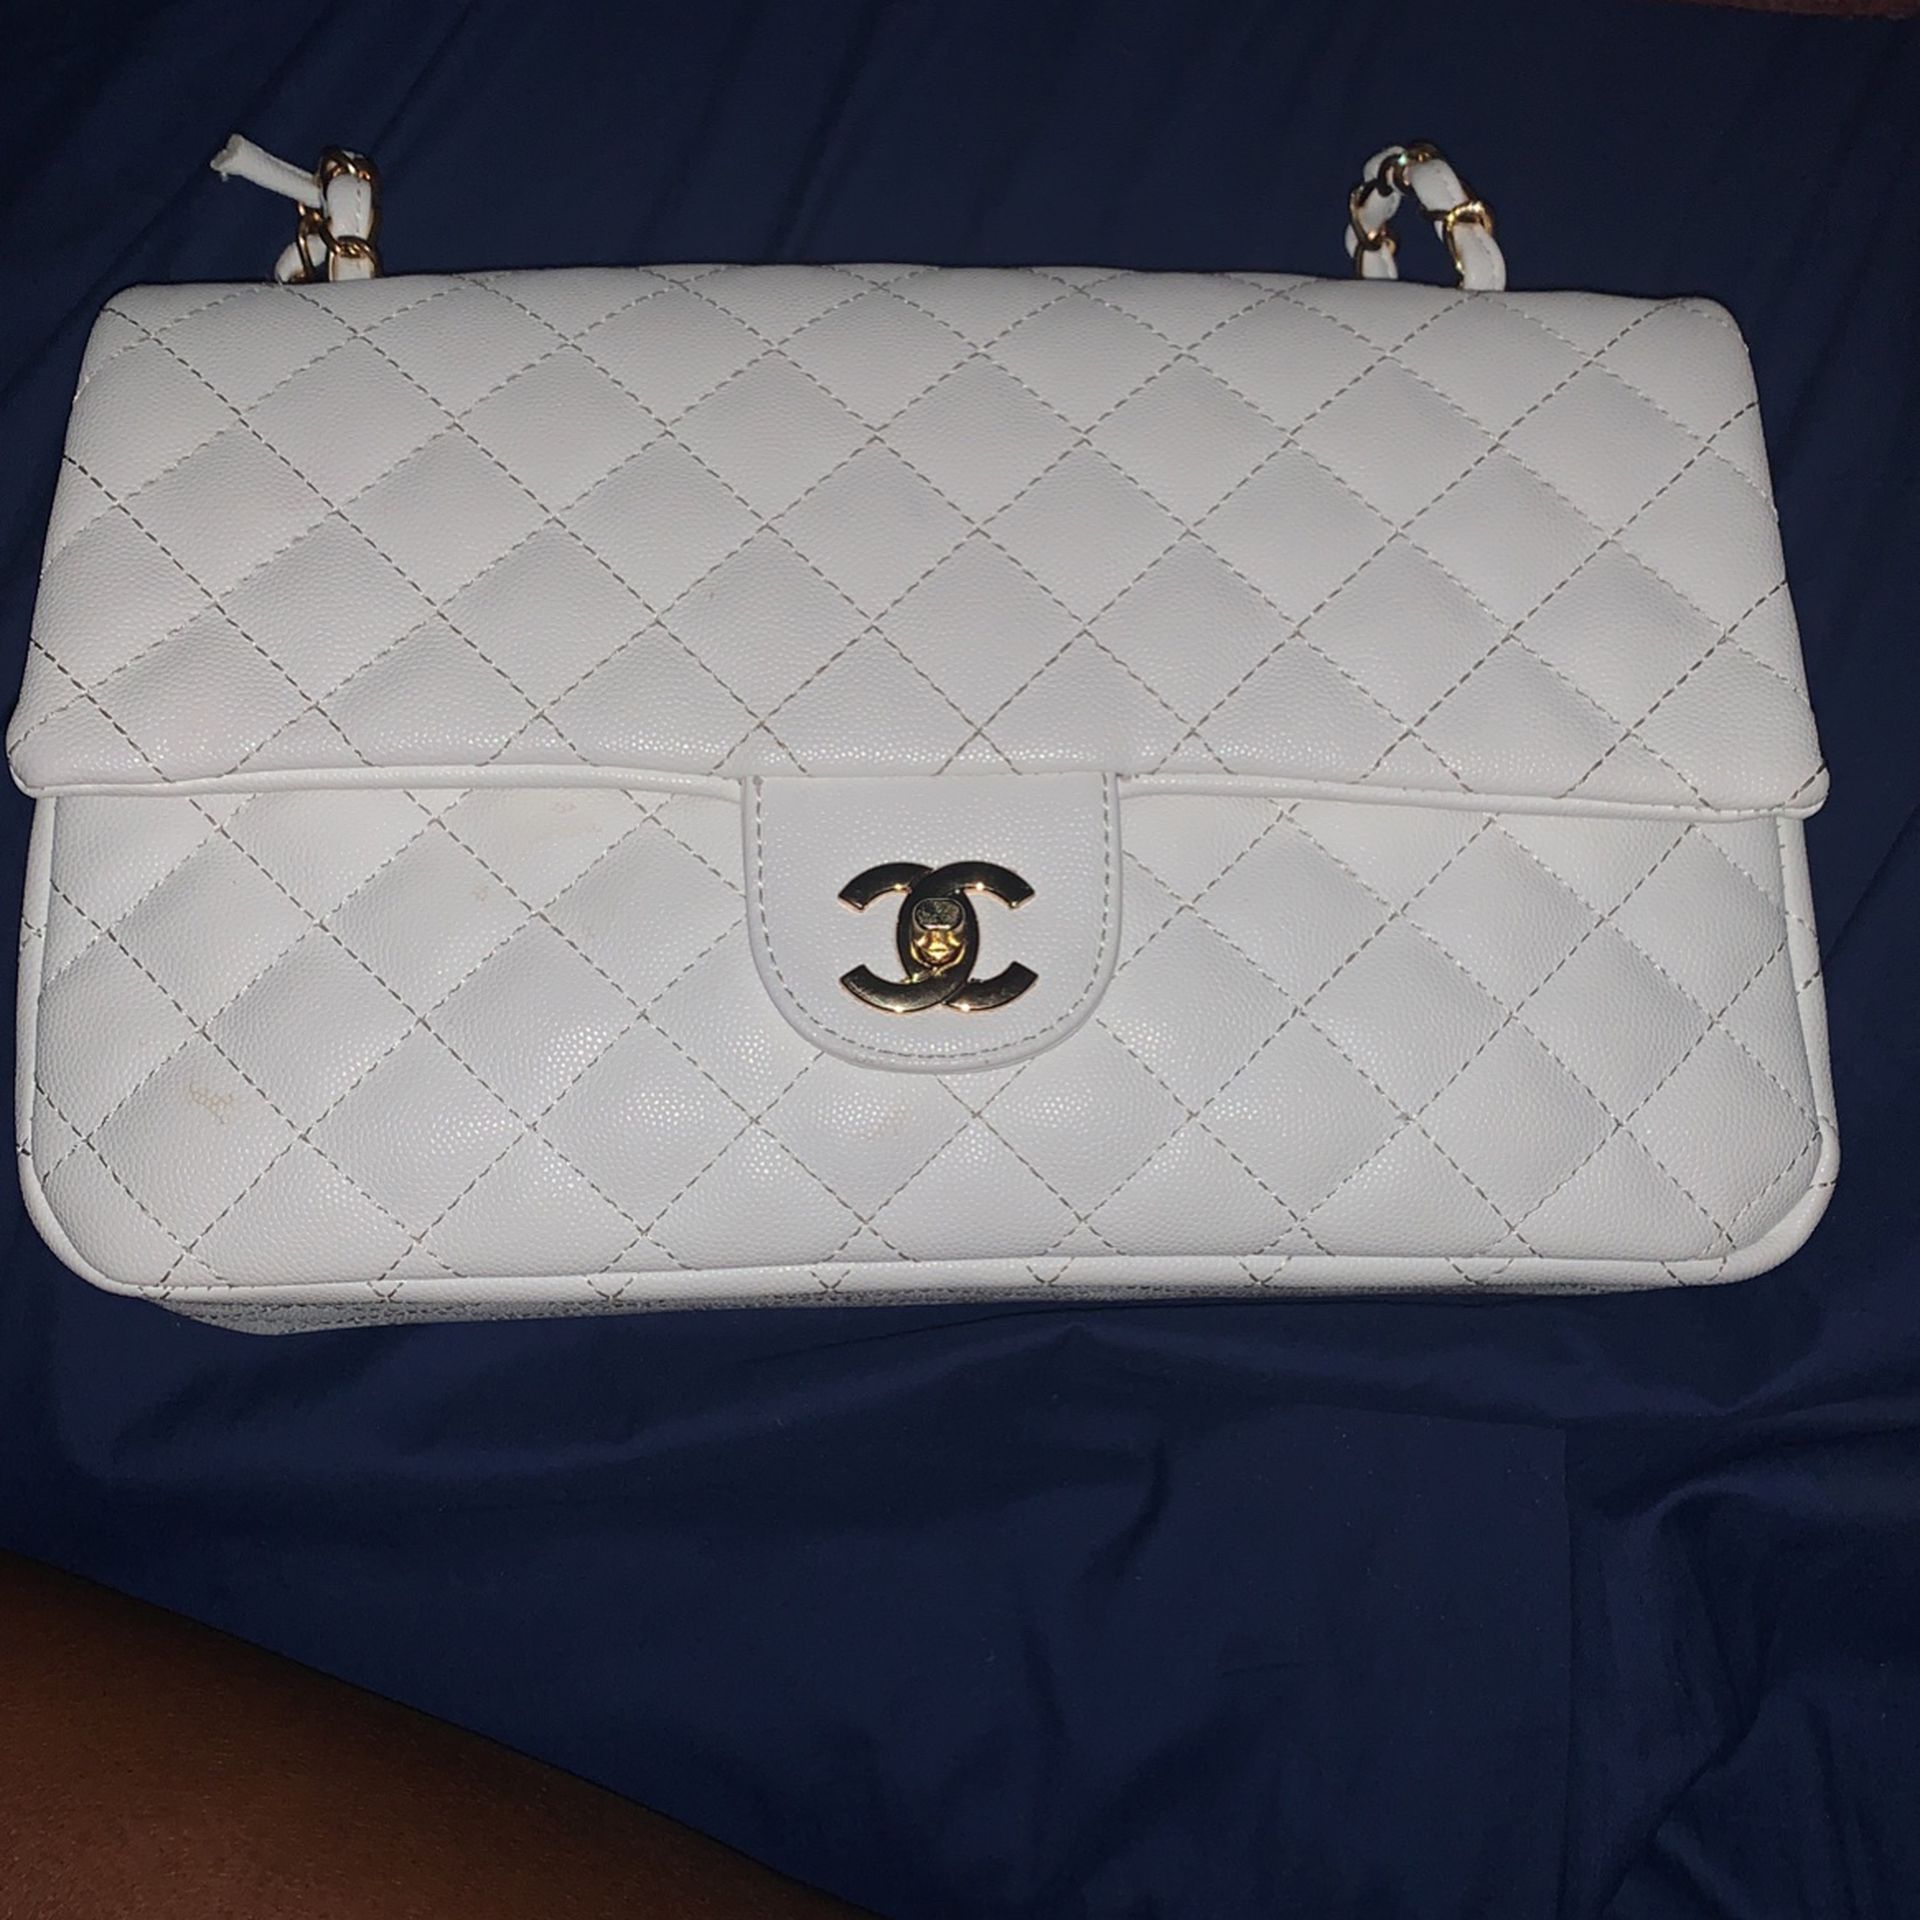 White Chanel Bag